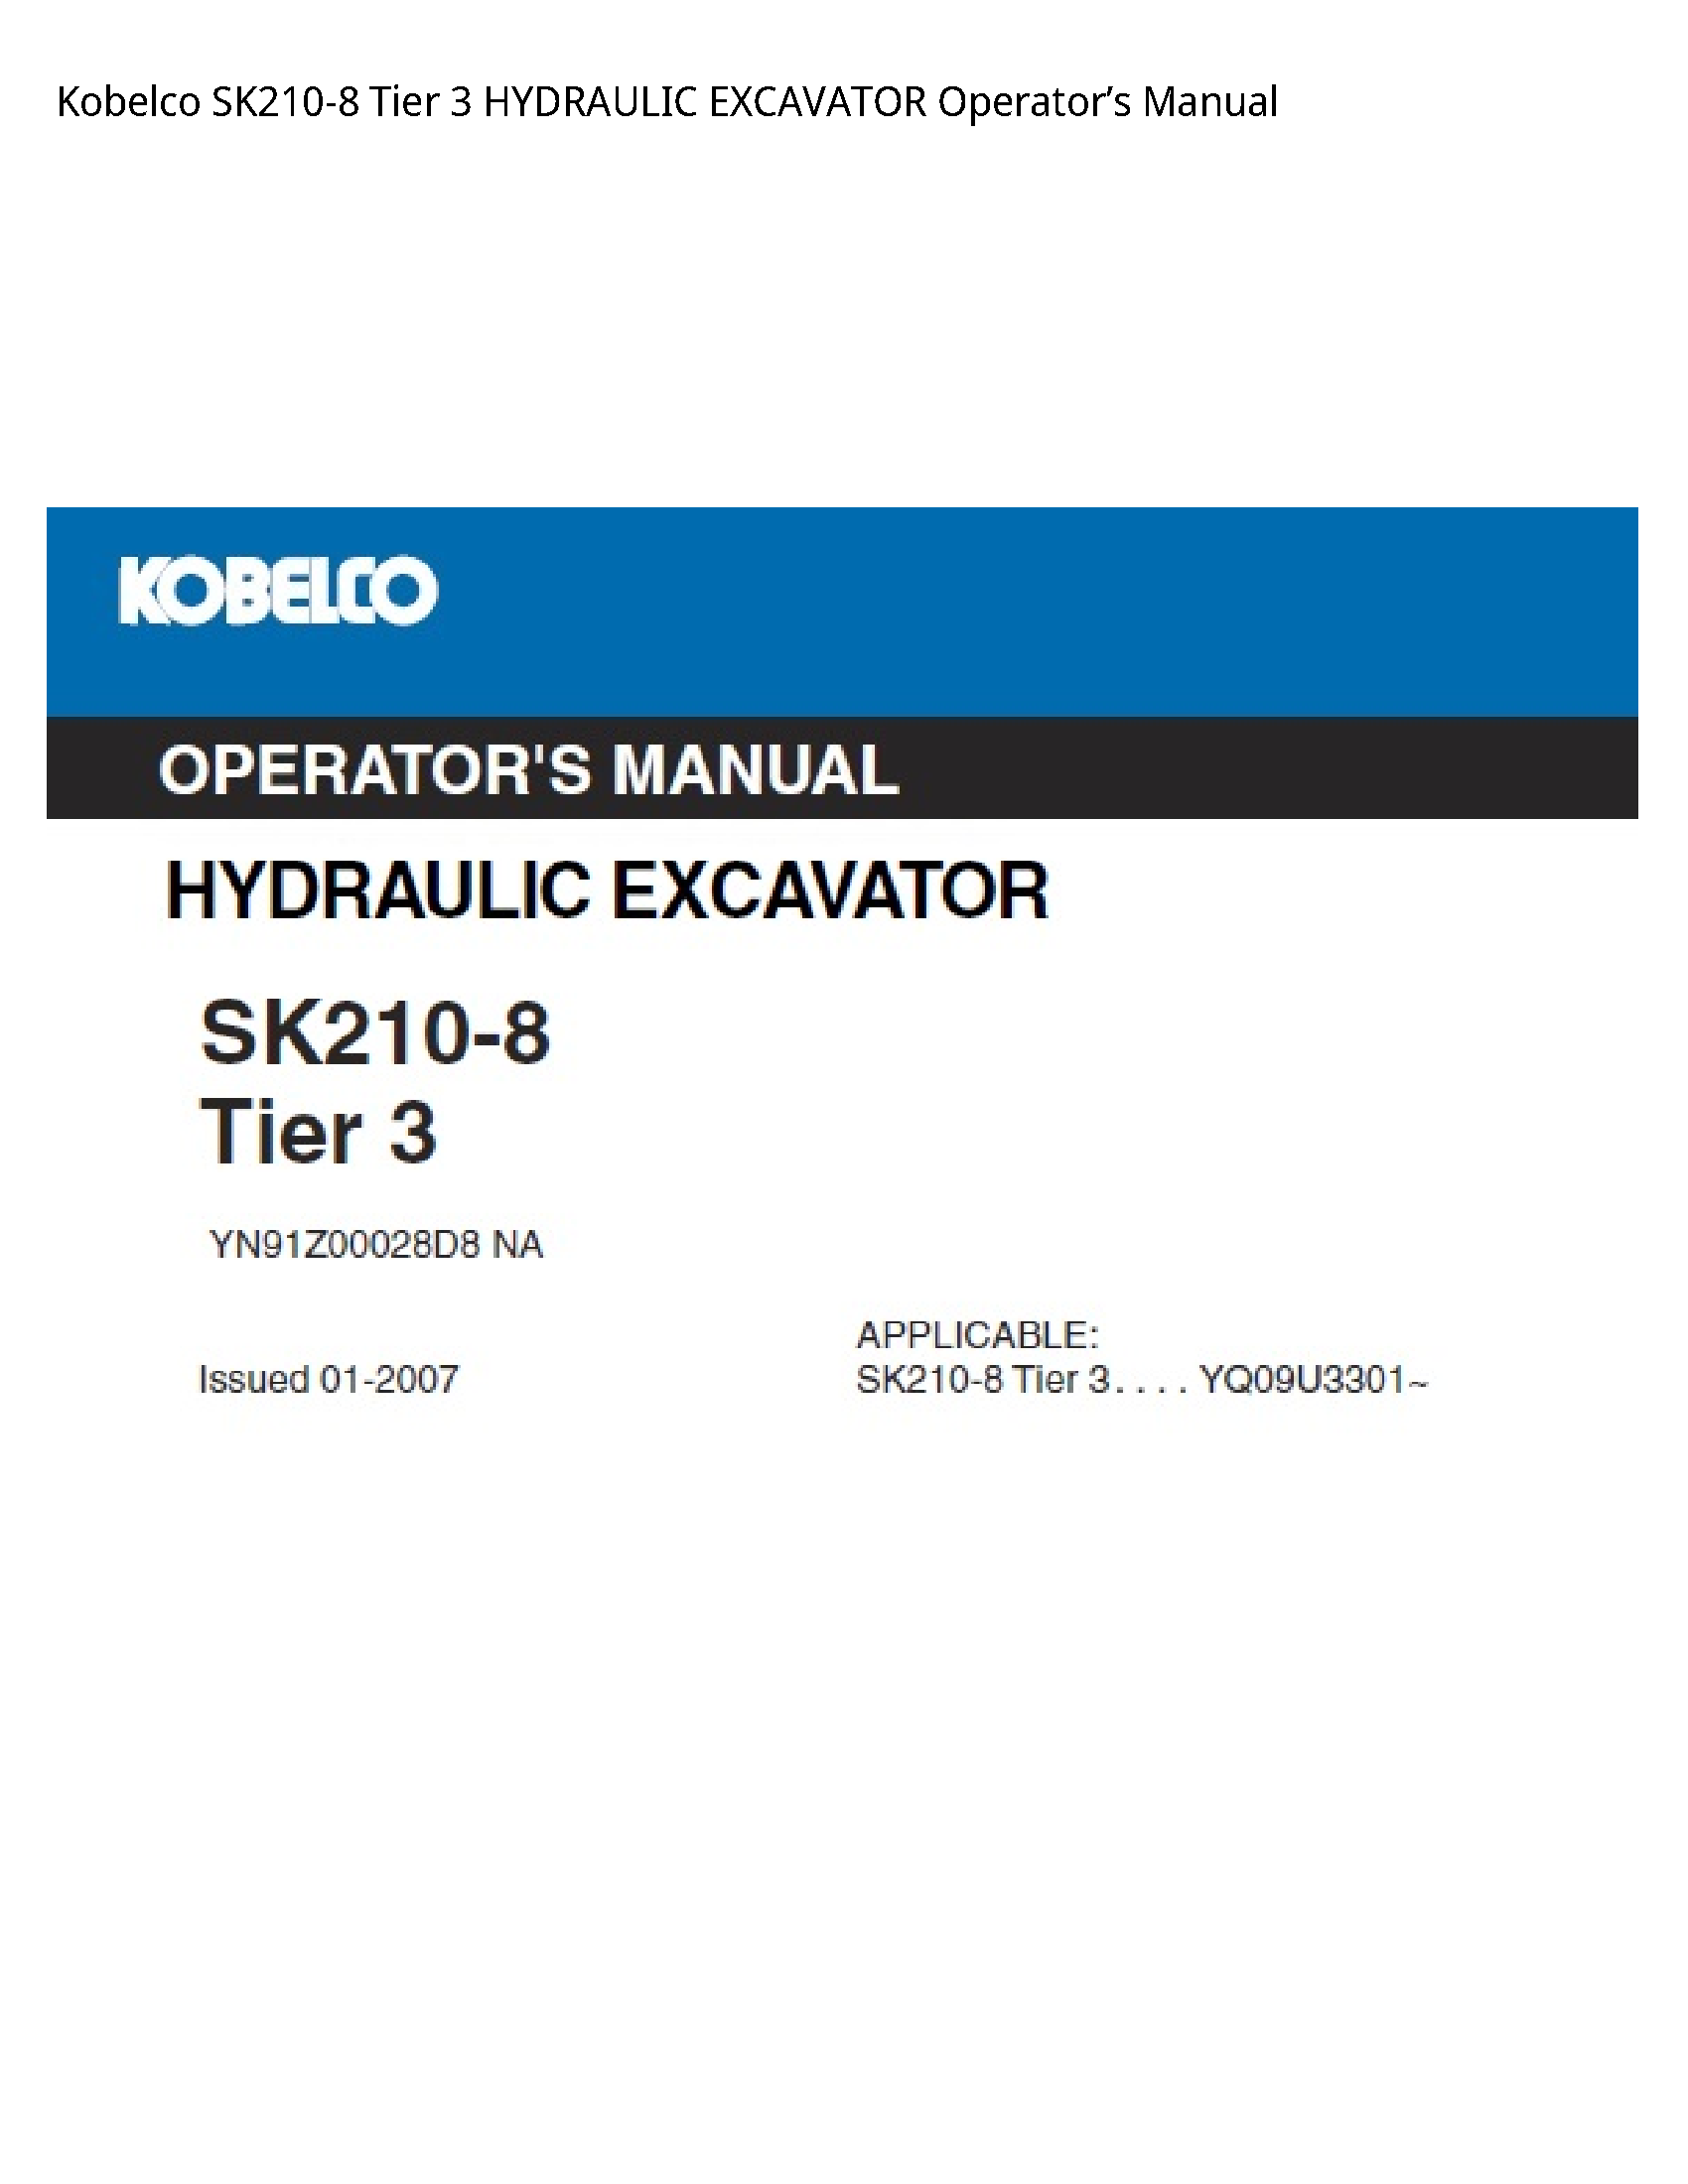 Kobelco SK210-8 Tier HYDRAULIC EXCAVATOR Operator’s manual